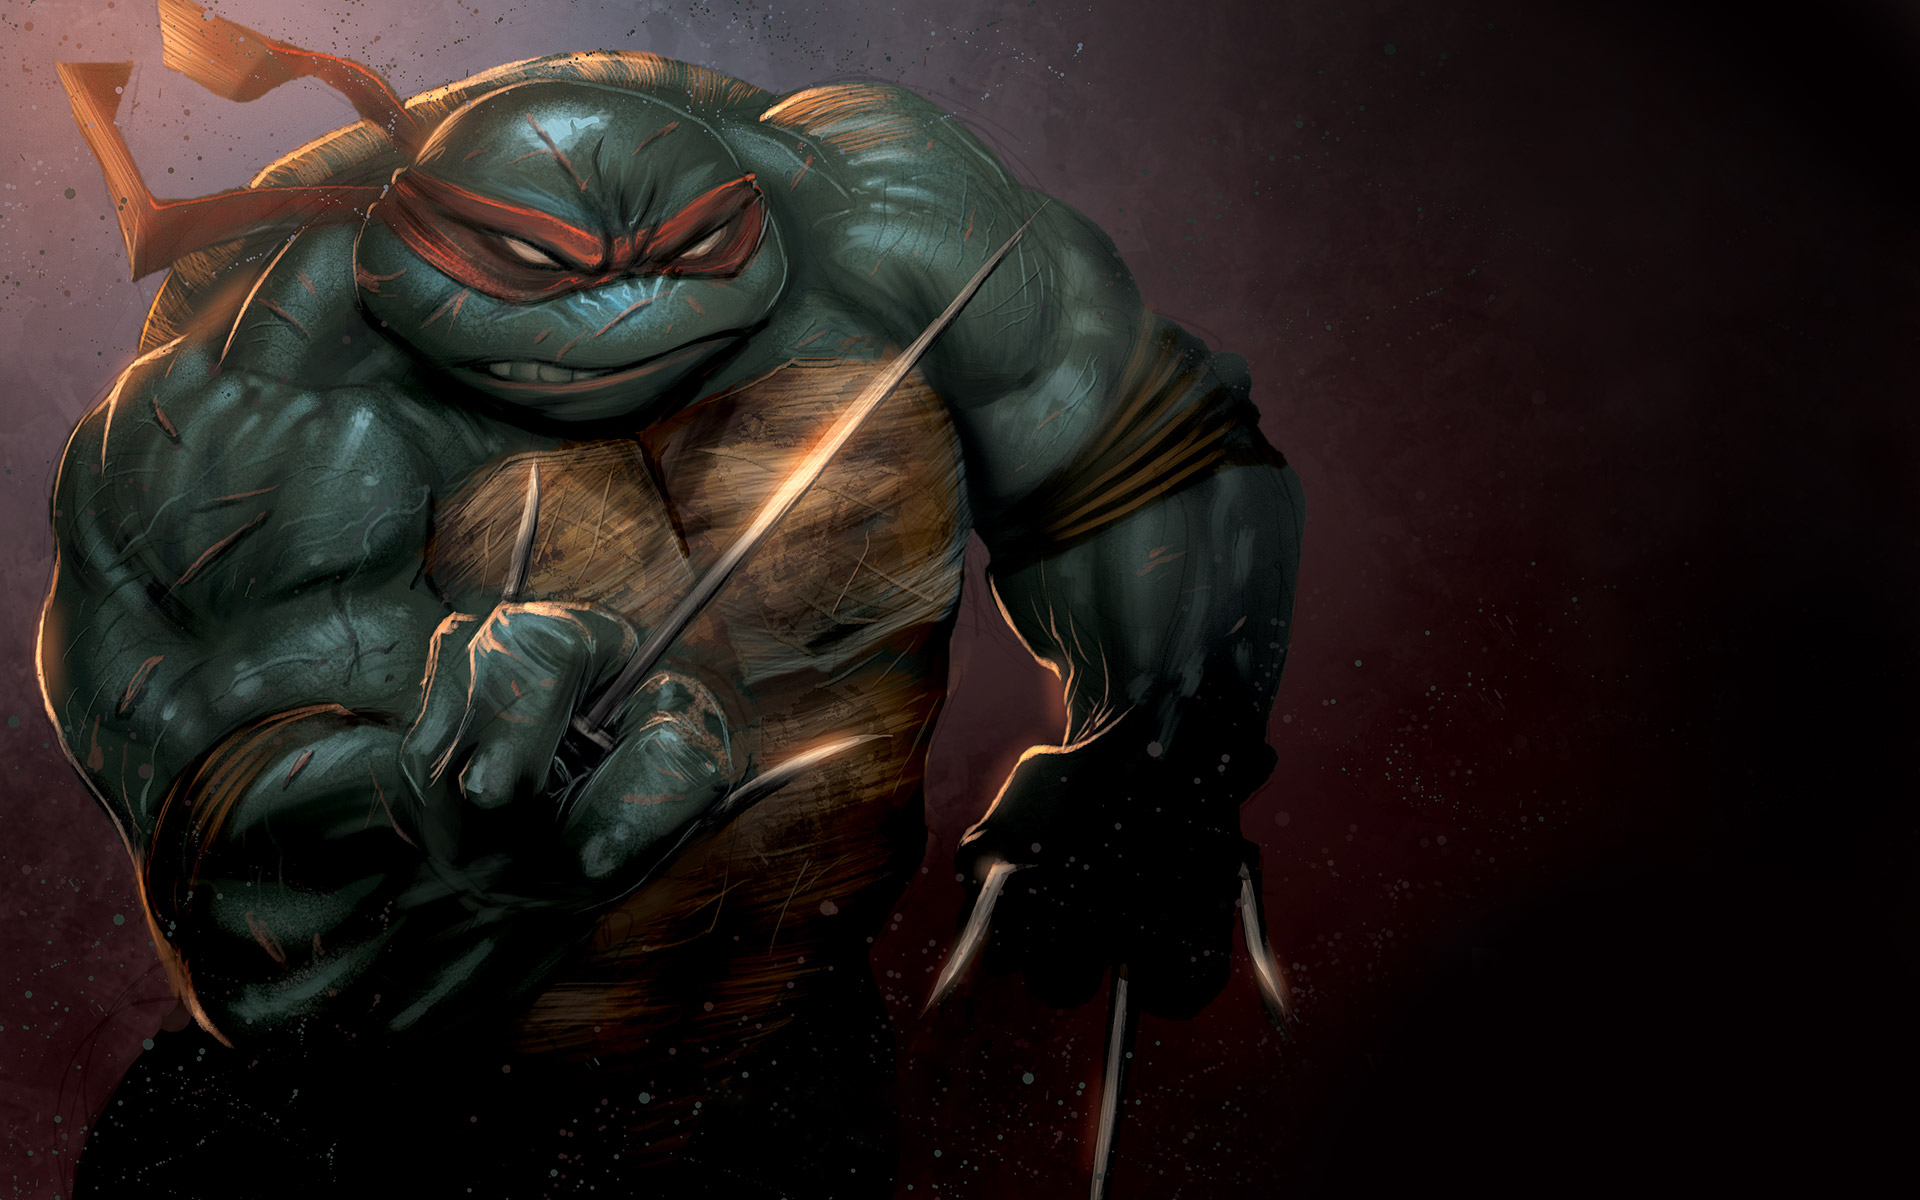 Raphael, one of the Teenage Mutant Ninja Turtles, in a high-definition desktop wallpaper.